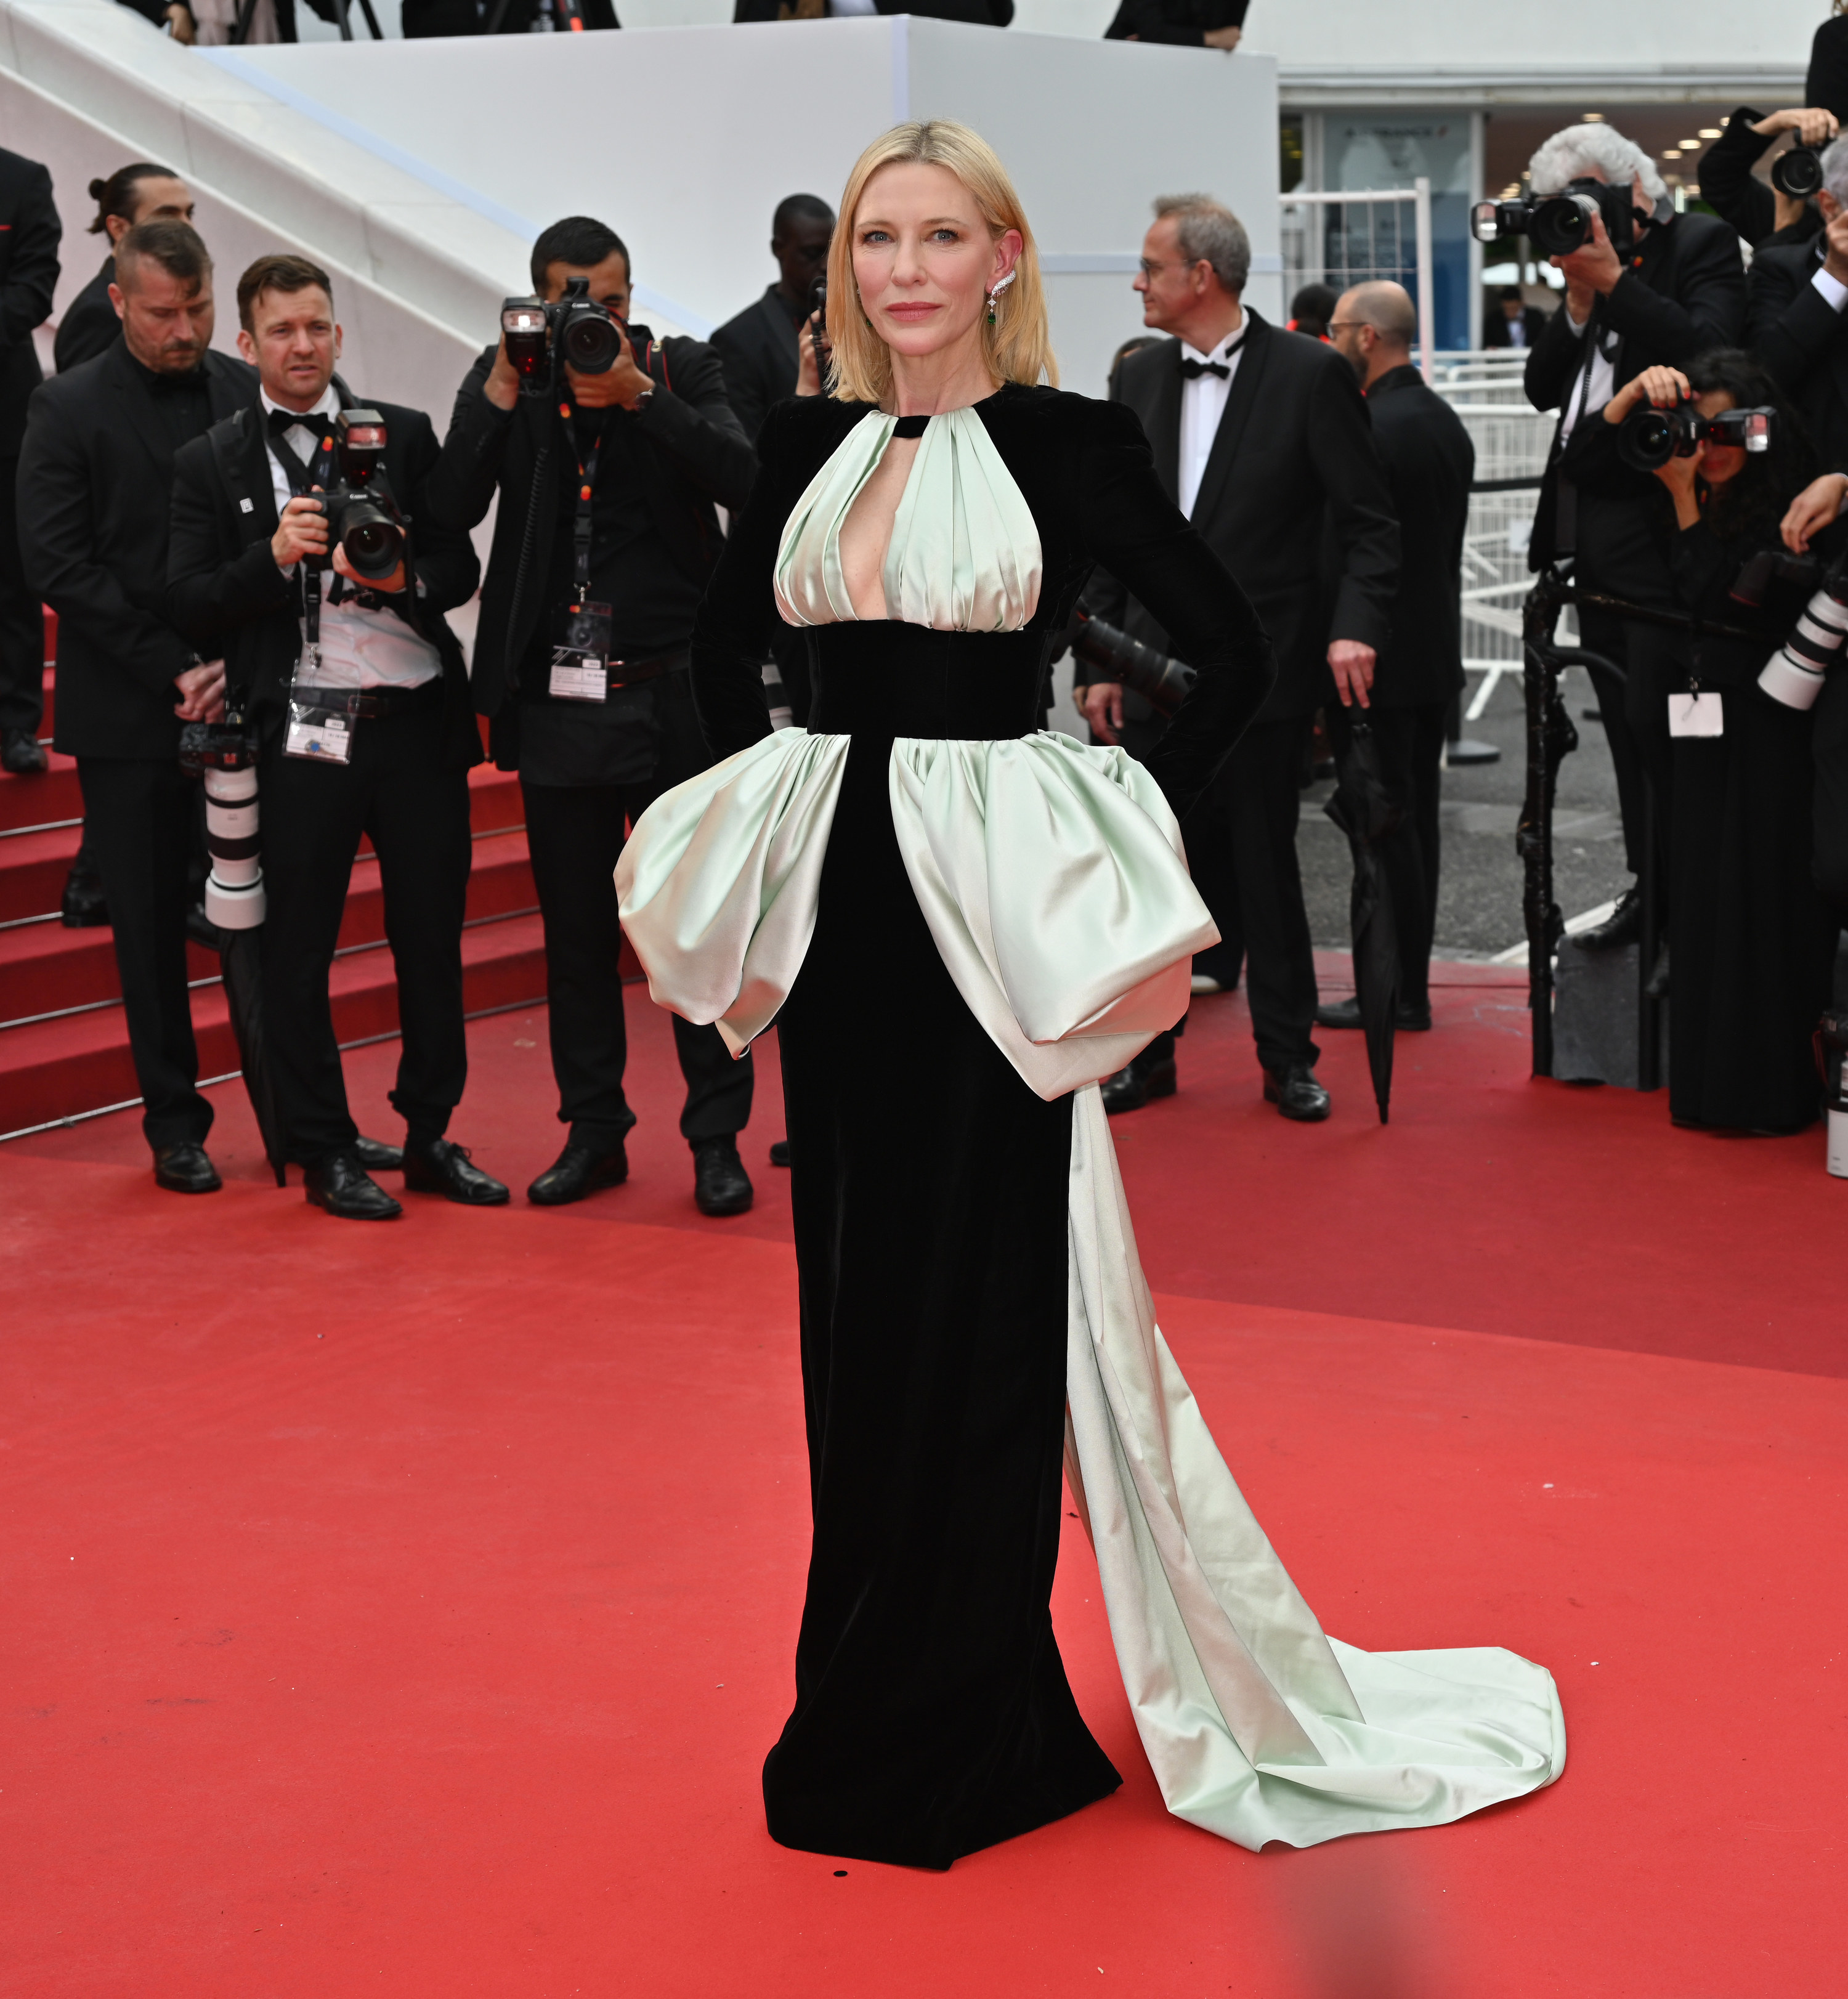 Cate Blanchett on the red carpet